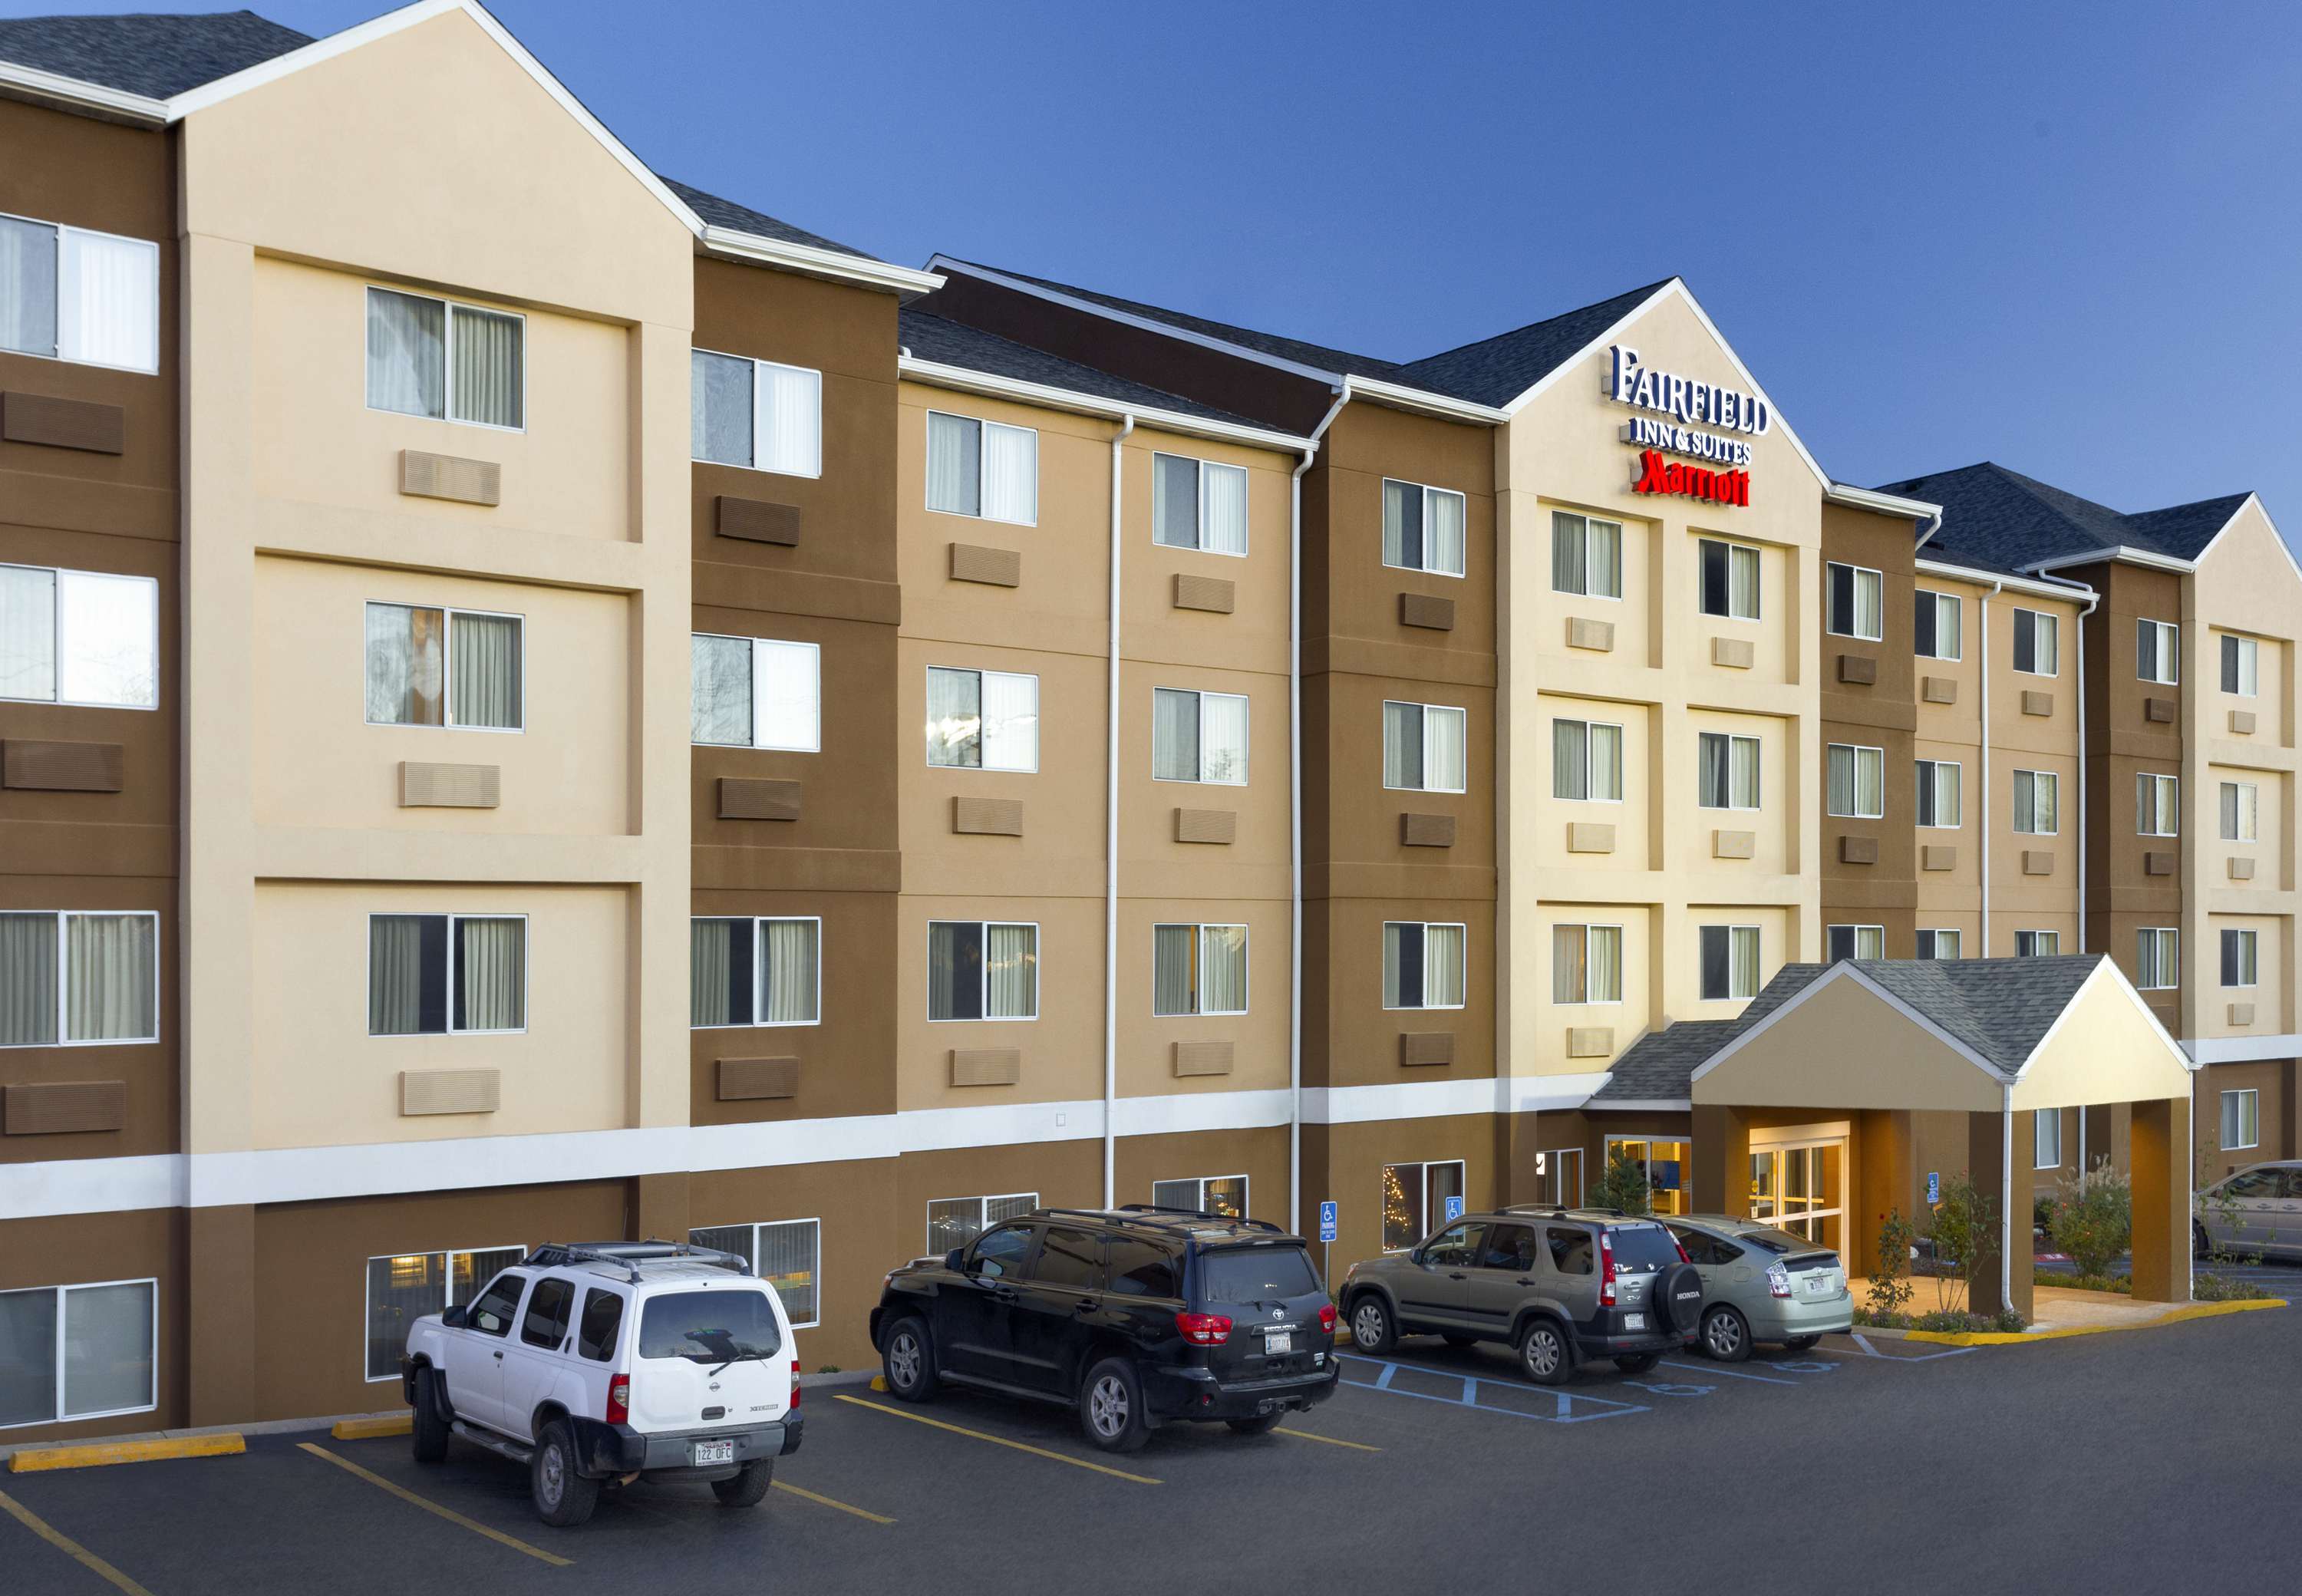 Photo of Fairfield Inn & Suites by Marriott Branson, Branson, MO